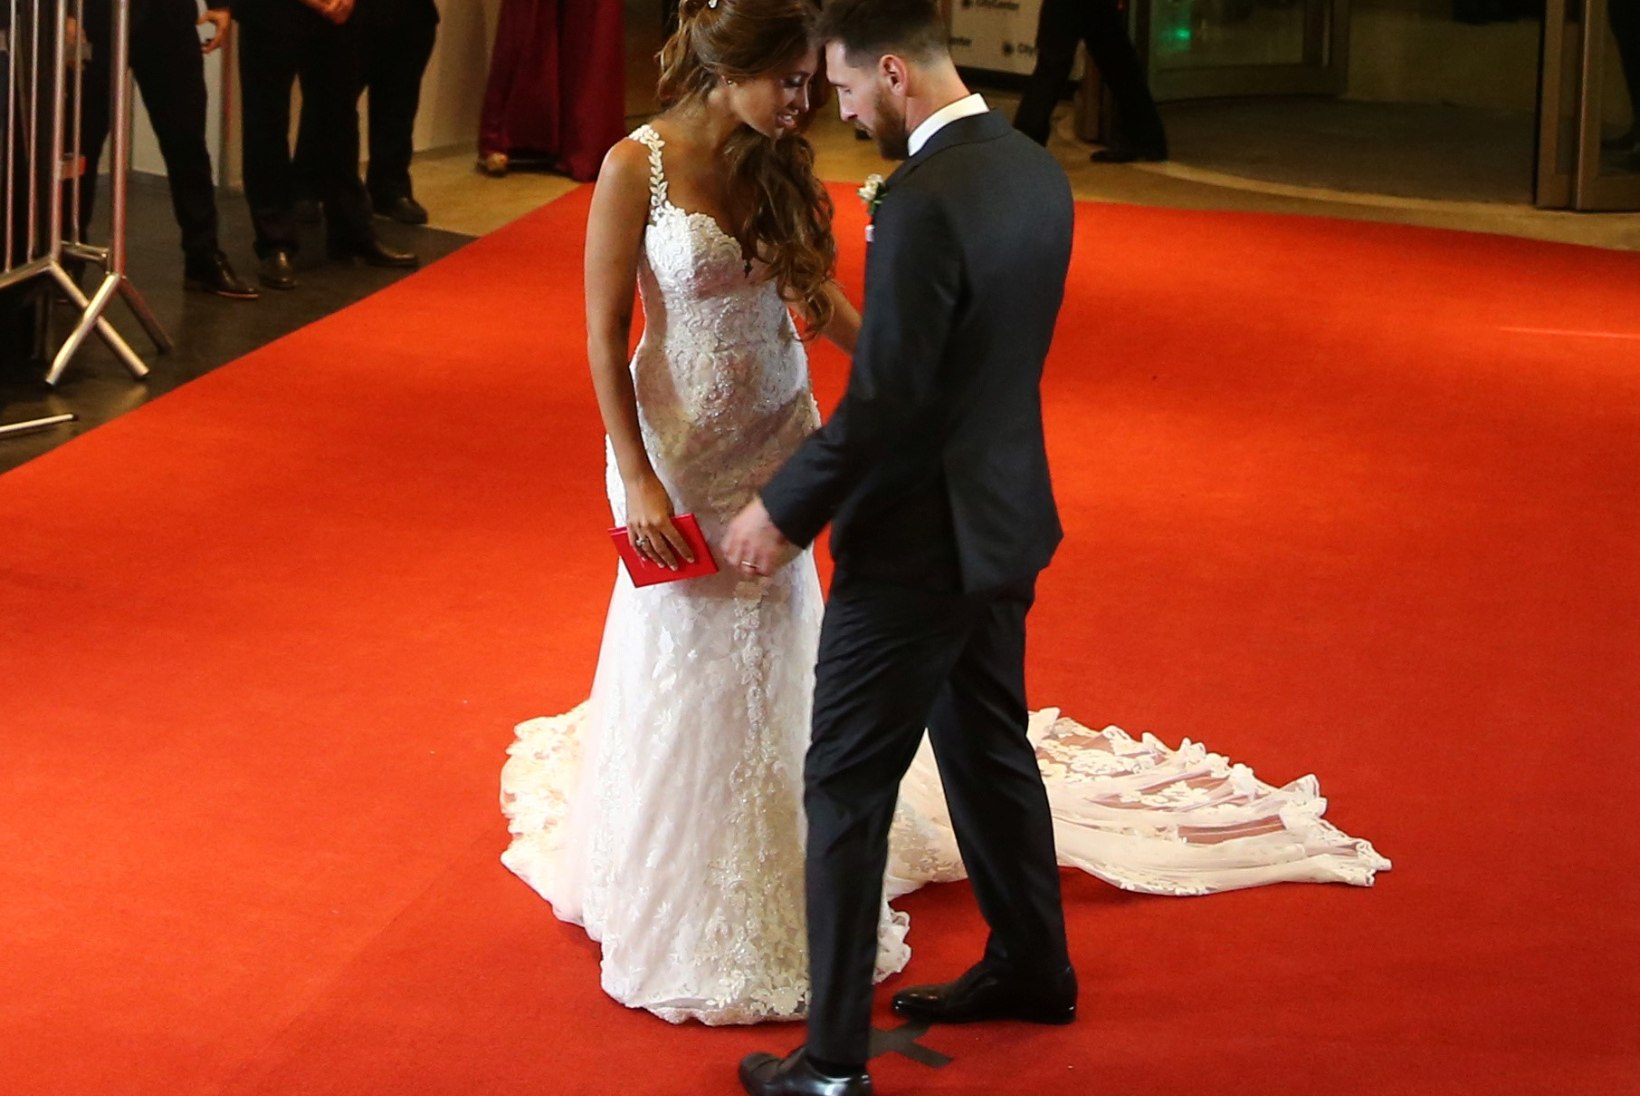 KIBE! FOTOD! Vutitäht Lionel Messi abiellus oma lapsepõlvekallima Antonella Roccuzzoga!